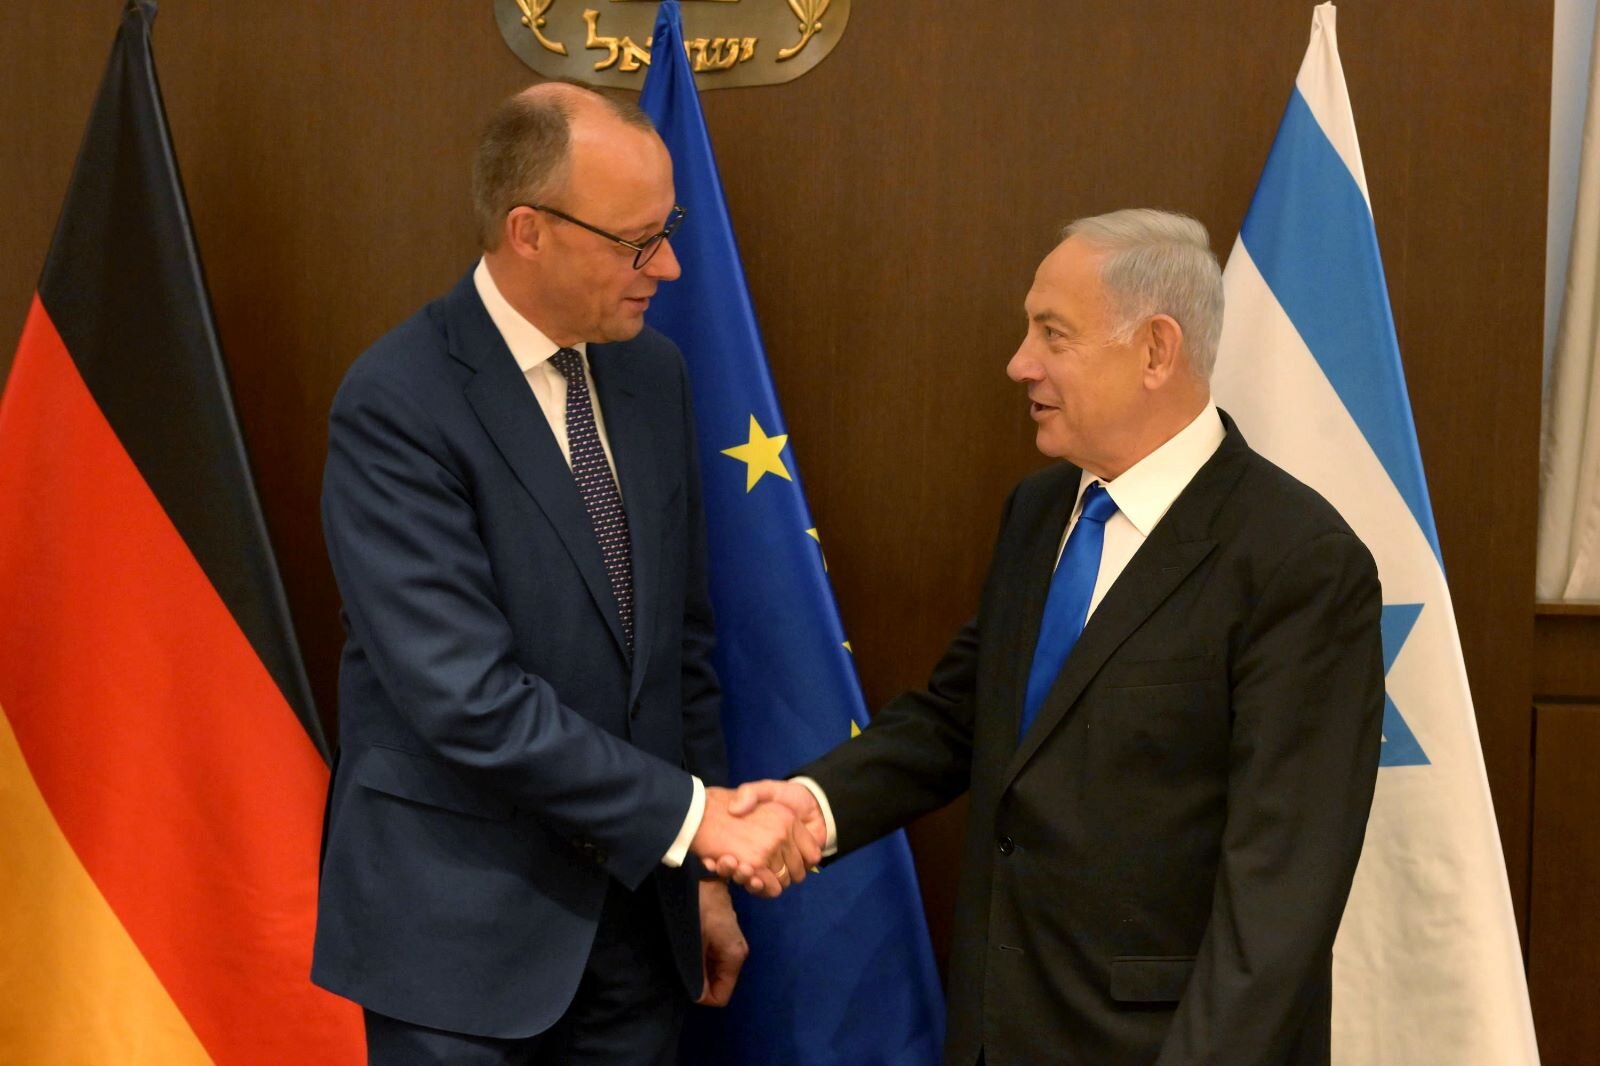 Netanyahu meets German opposition head, hails ‘special ties' with Berlin